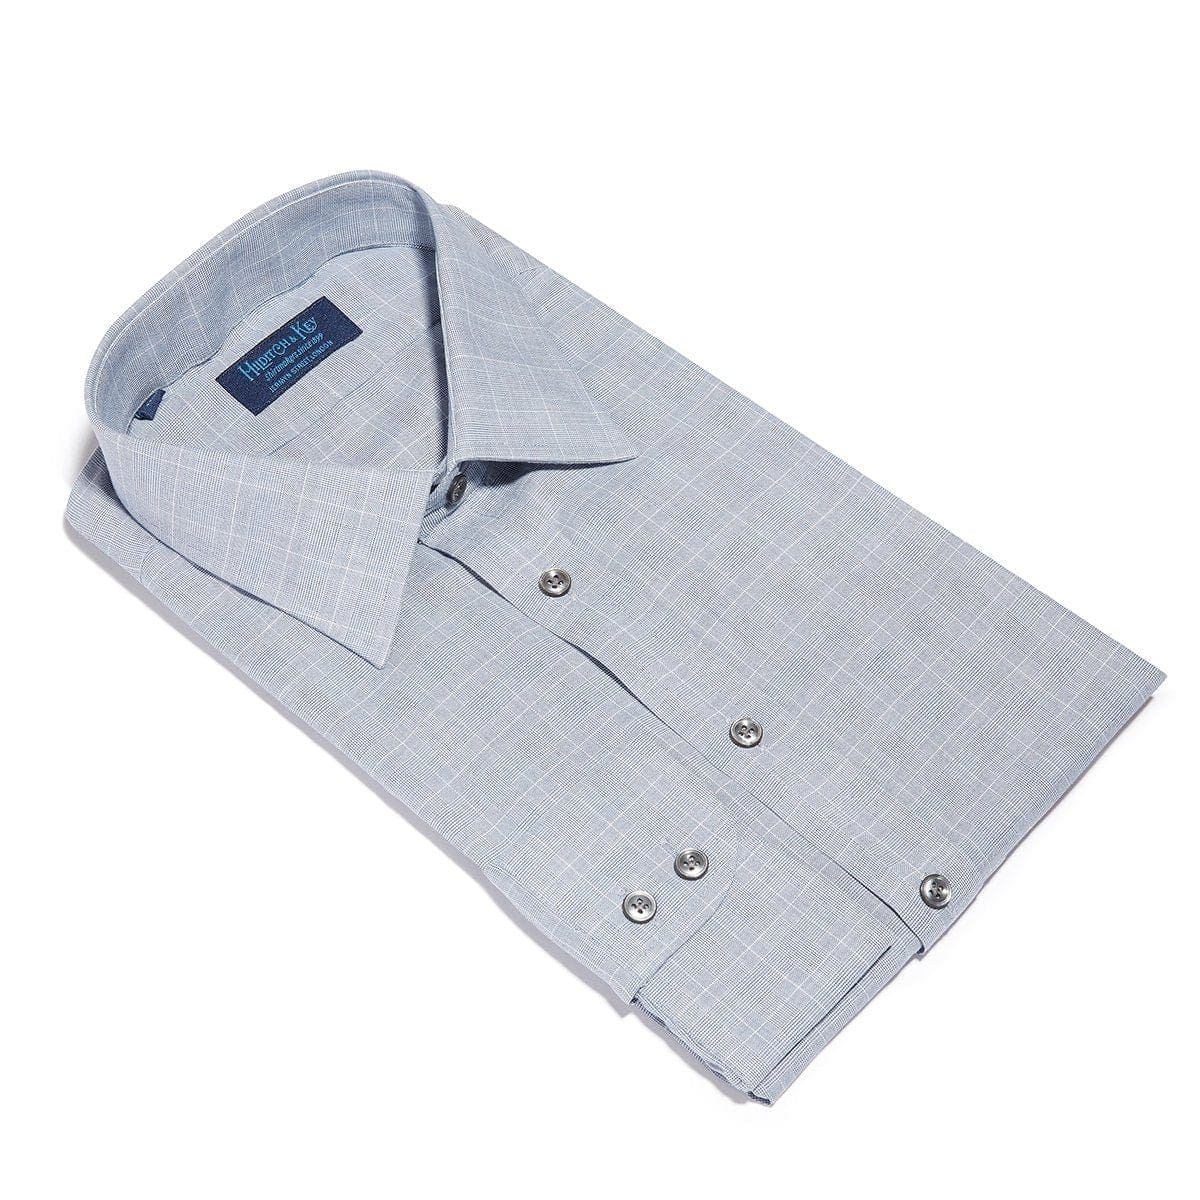 Contemporary Fit, Classic Collar, 2 Button Cuff Shirt in a Blue & White Check Twill Cotton